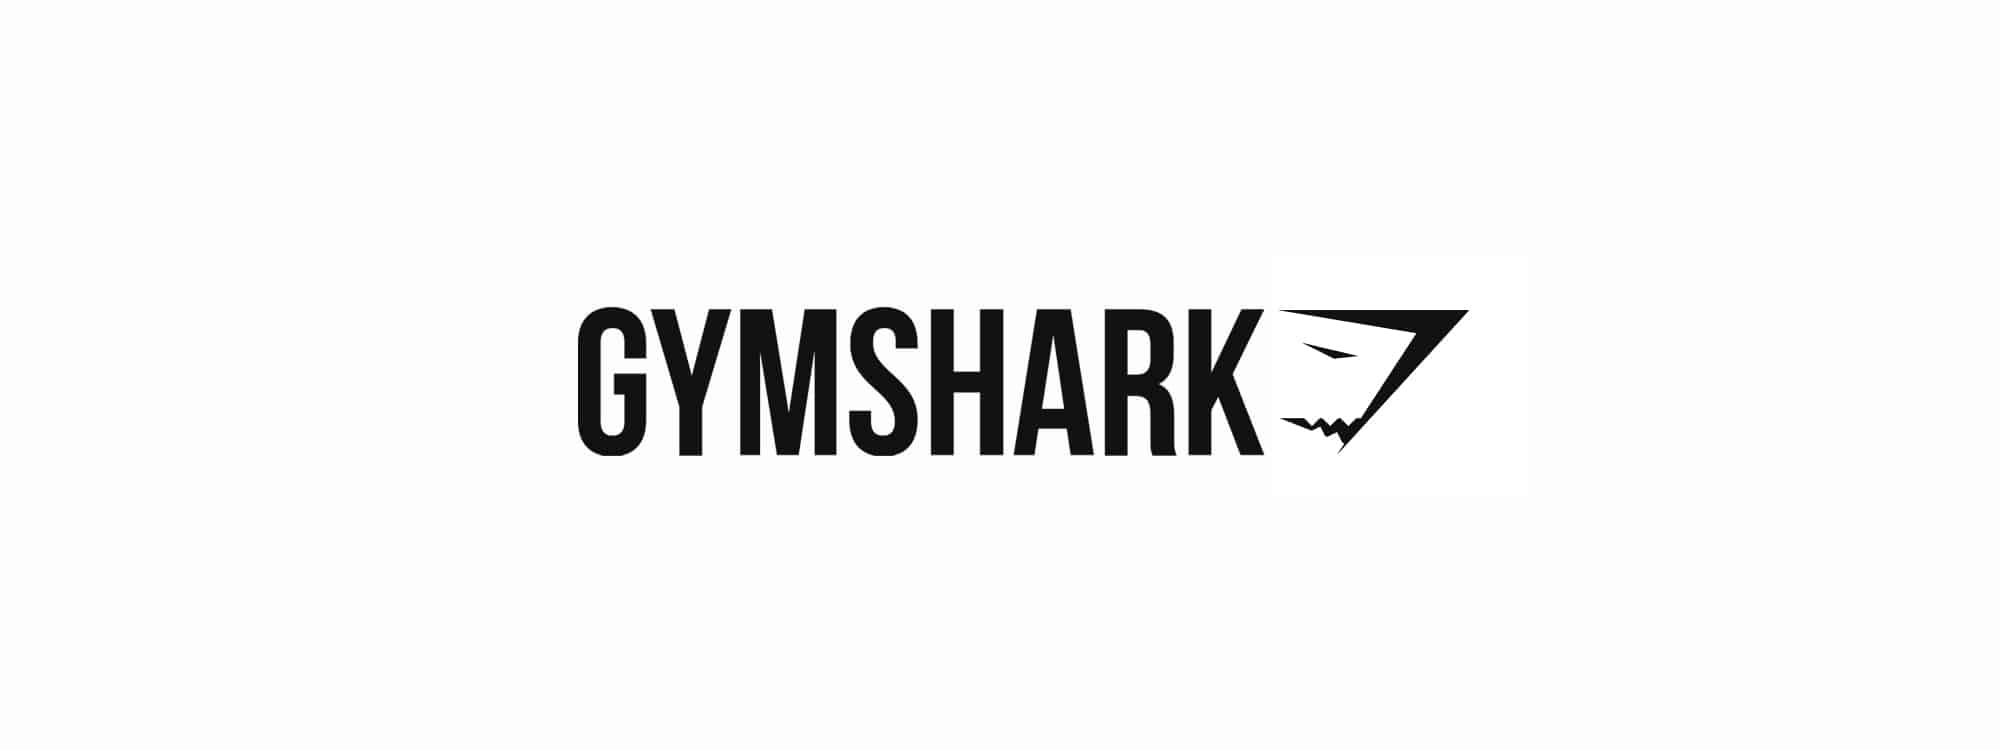 How to Ship Gymshark US Internationally